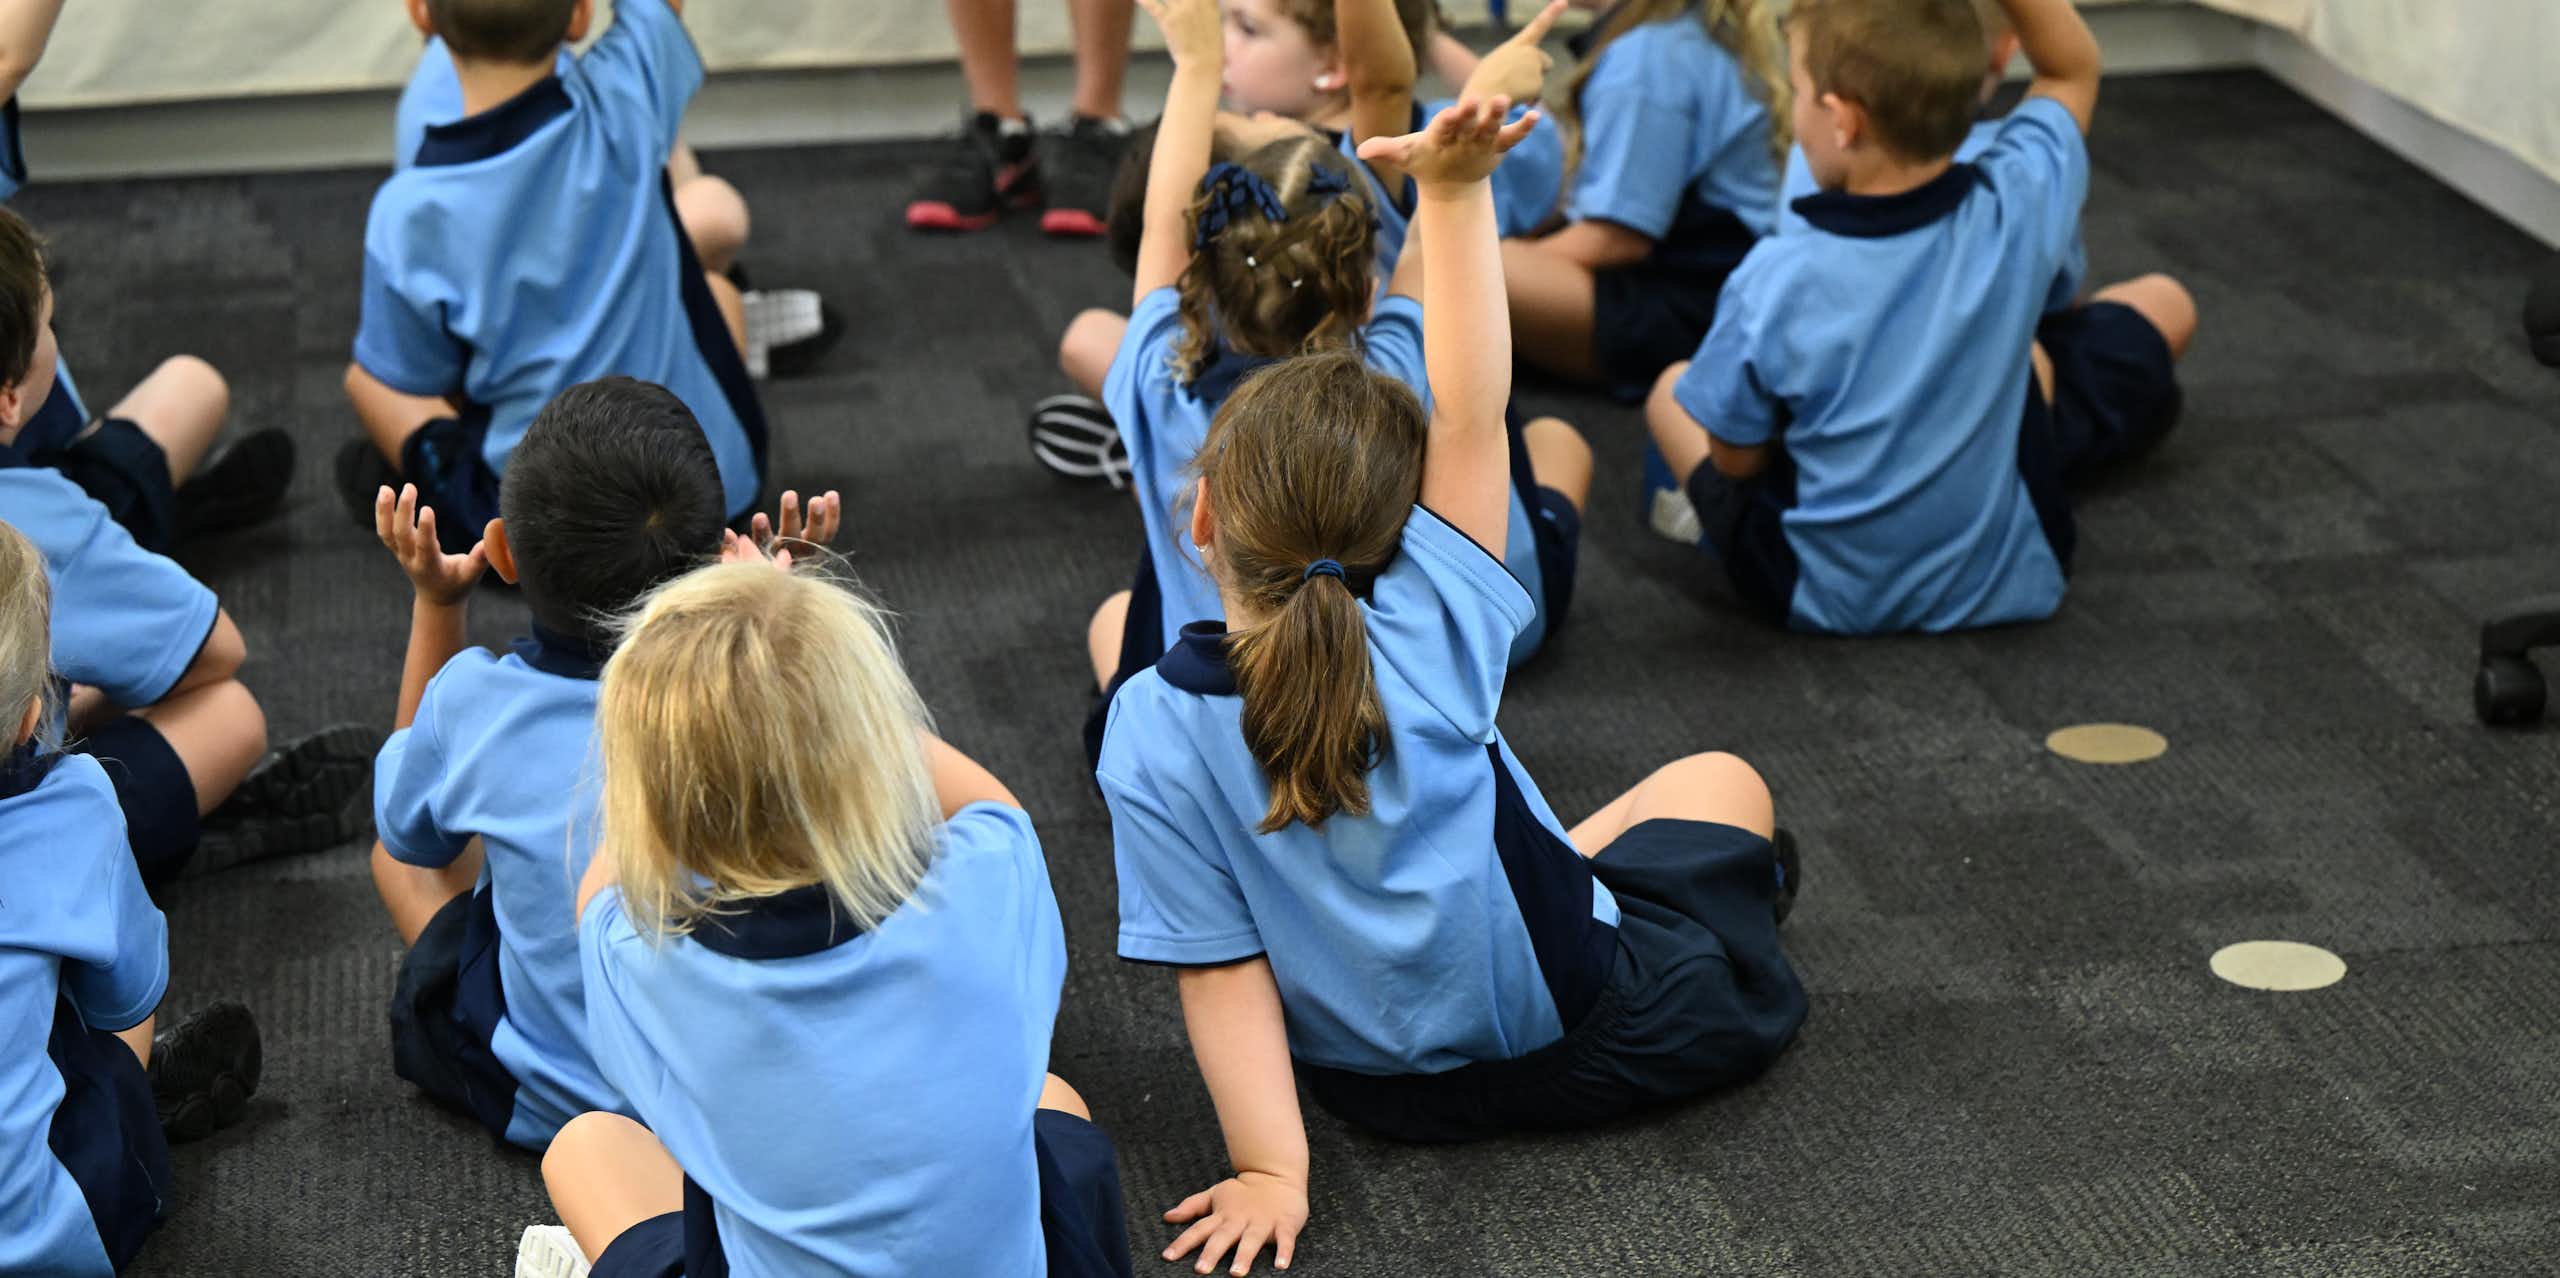 Children in school uniforms raise their hands while sitting on the floor. 